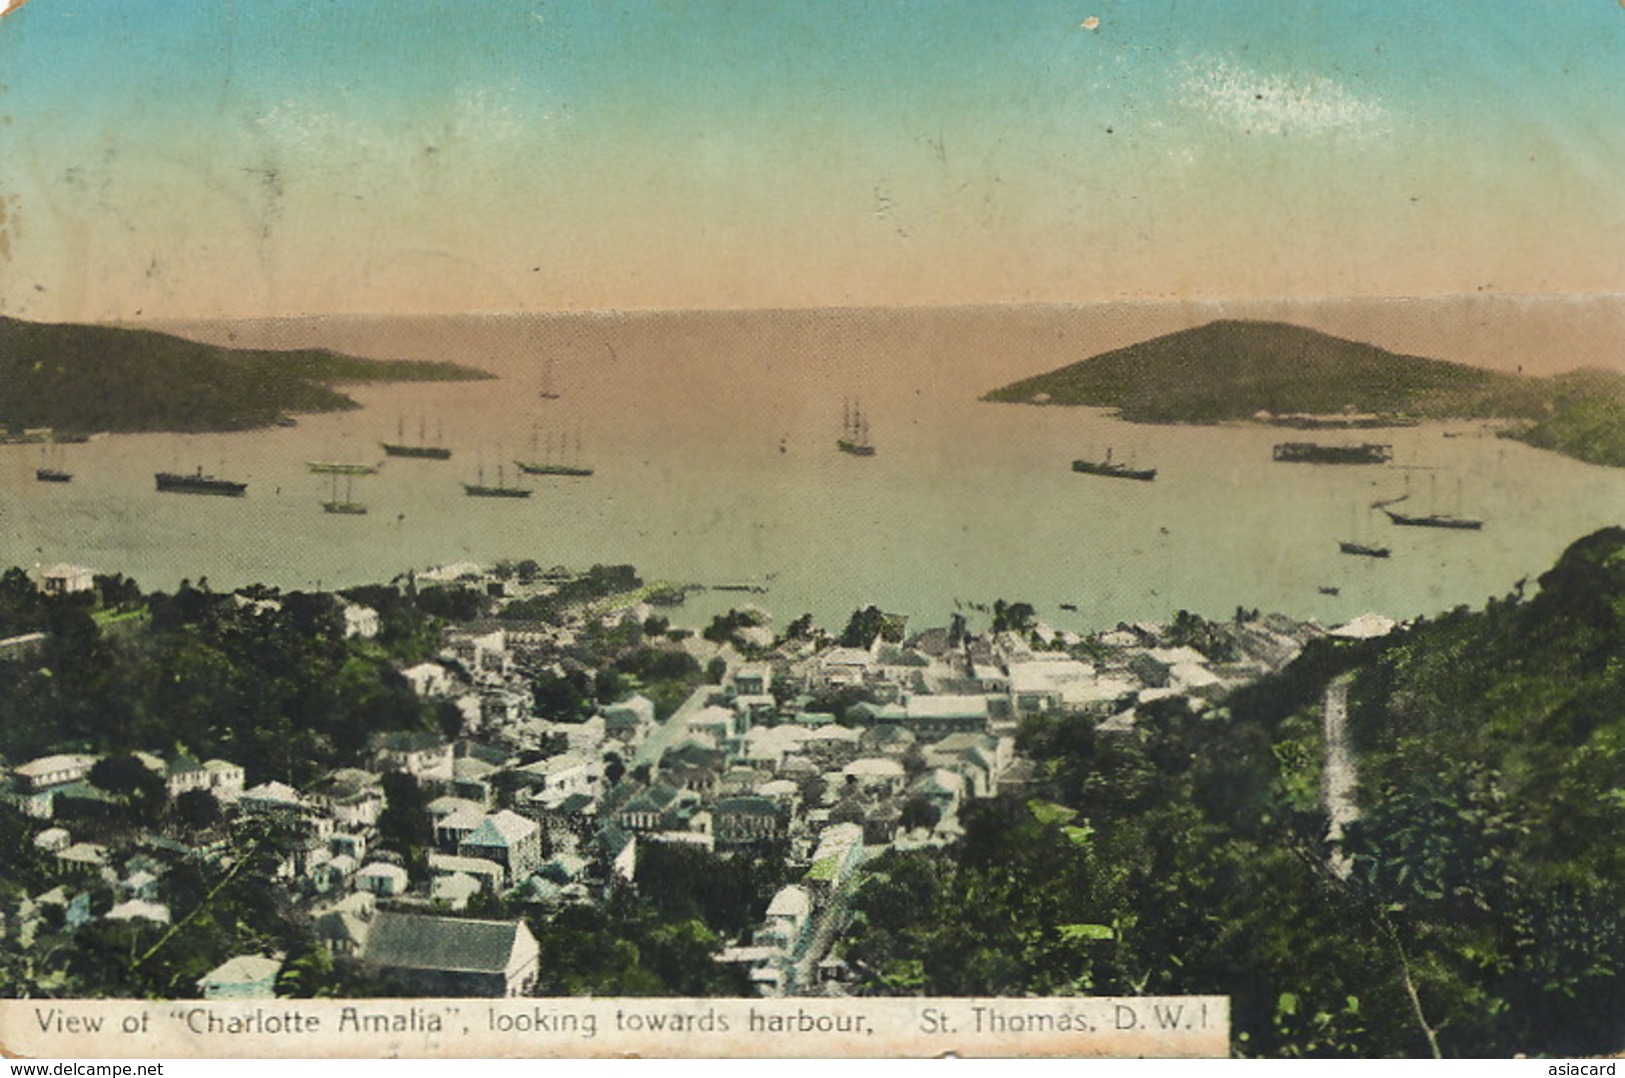 View Of " Charlotte Amalia " Looking Towards Harbour St Thomas D.W.I. Taylor P. Used To Jacmel Haiti 1912 - Virgin Islands, US